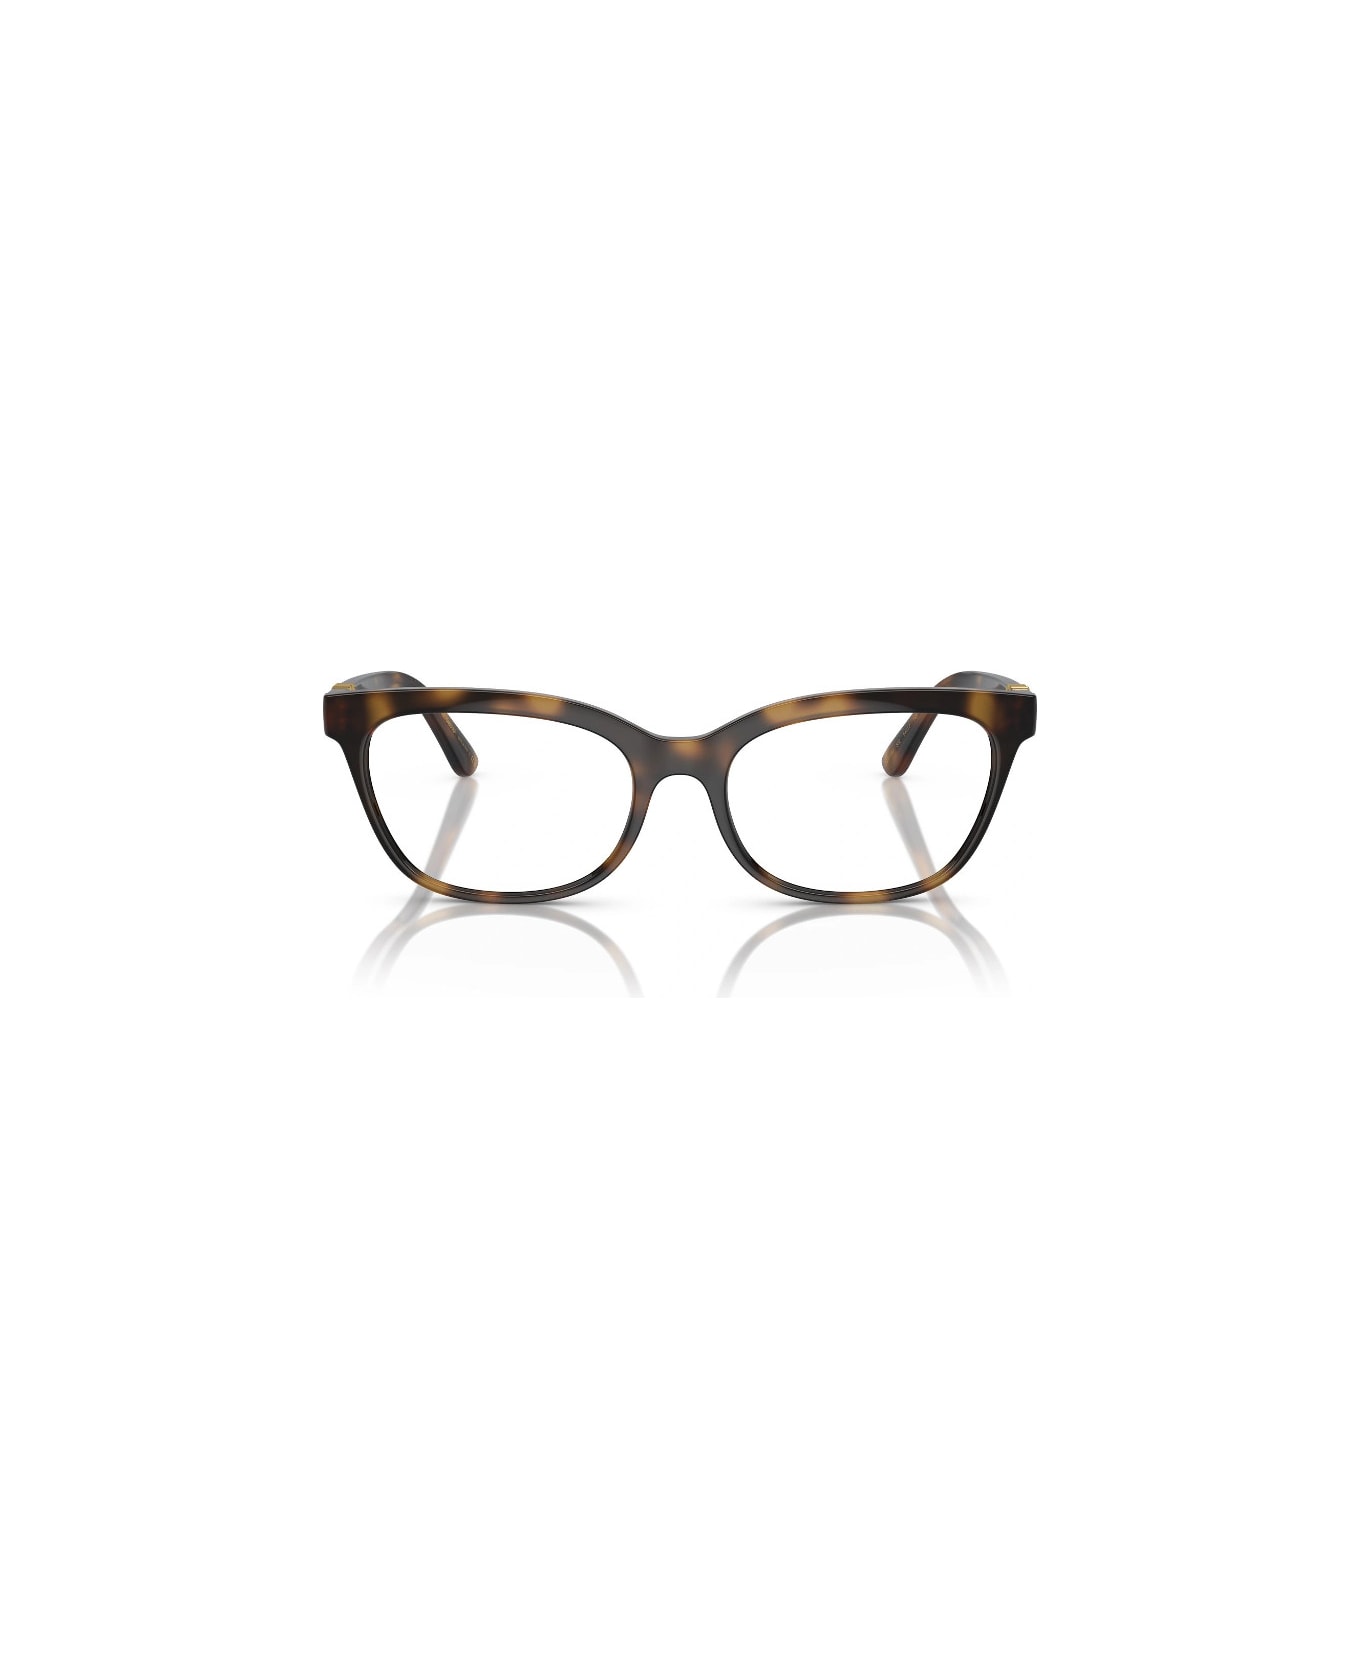 Dolce & Gabbana Eyewear DG5106 502 Glasses アイウェア